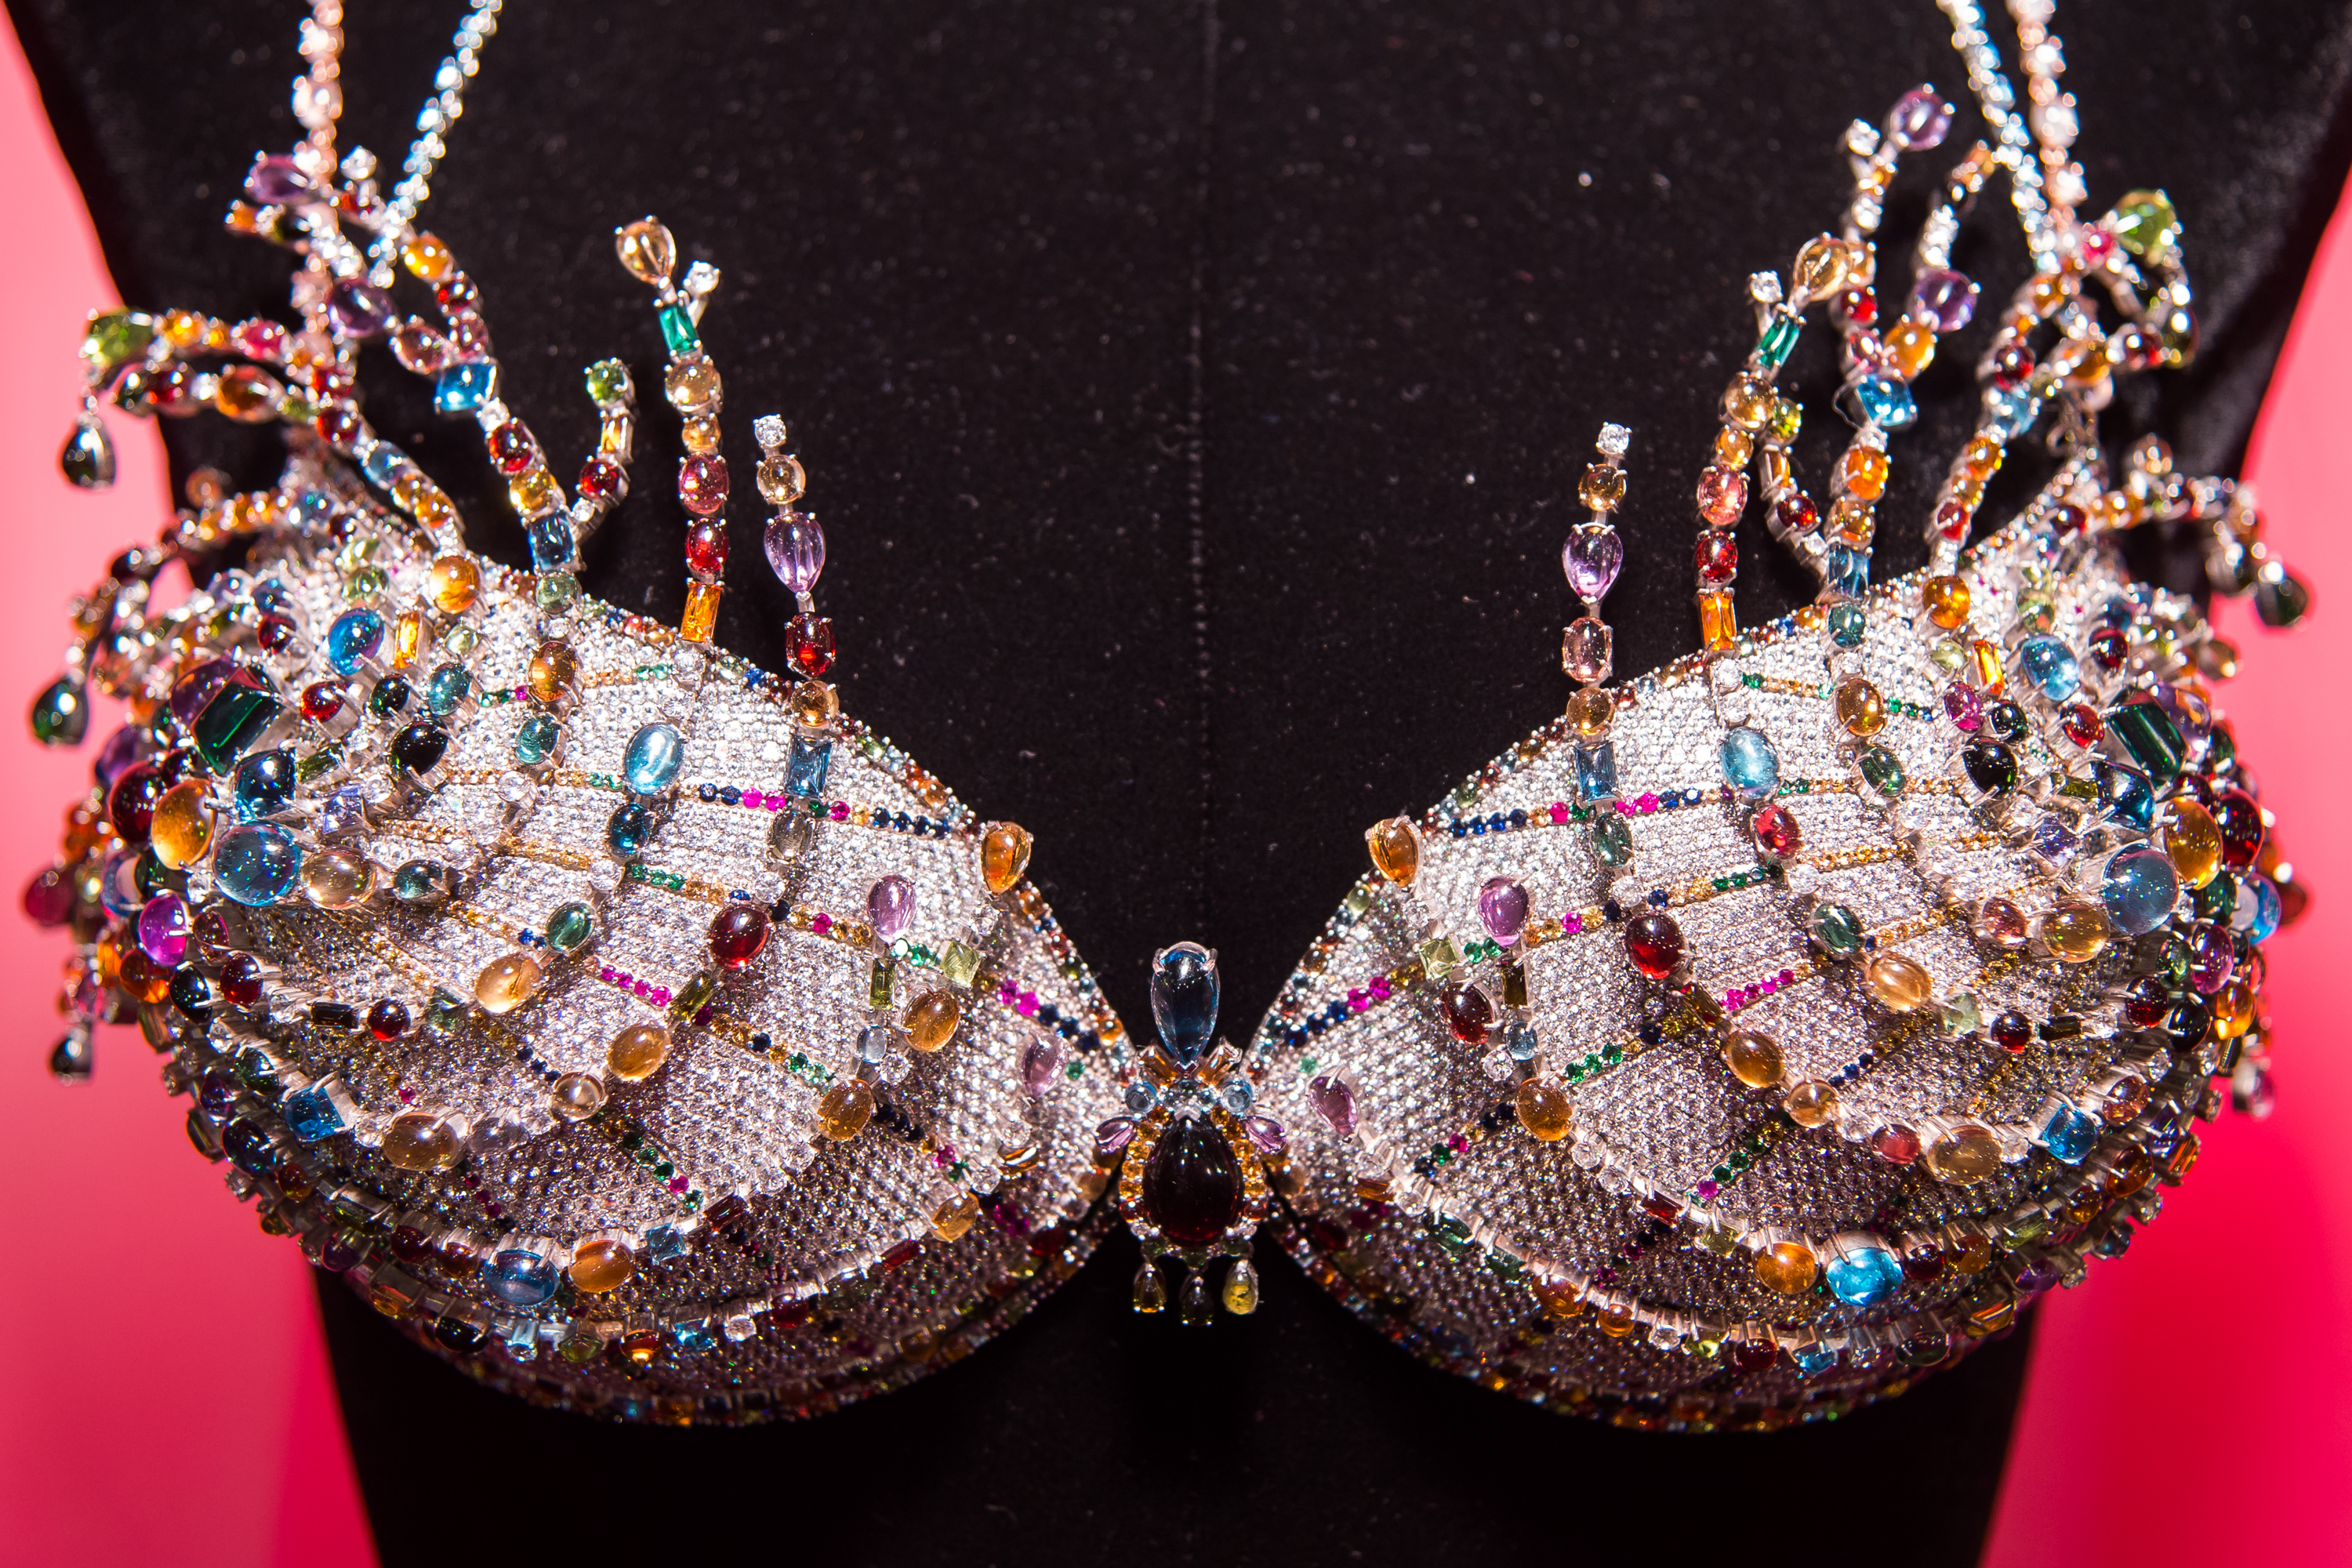 Victoria's Secret Diamond Bras and Fashion by Mouawad